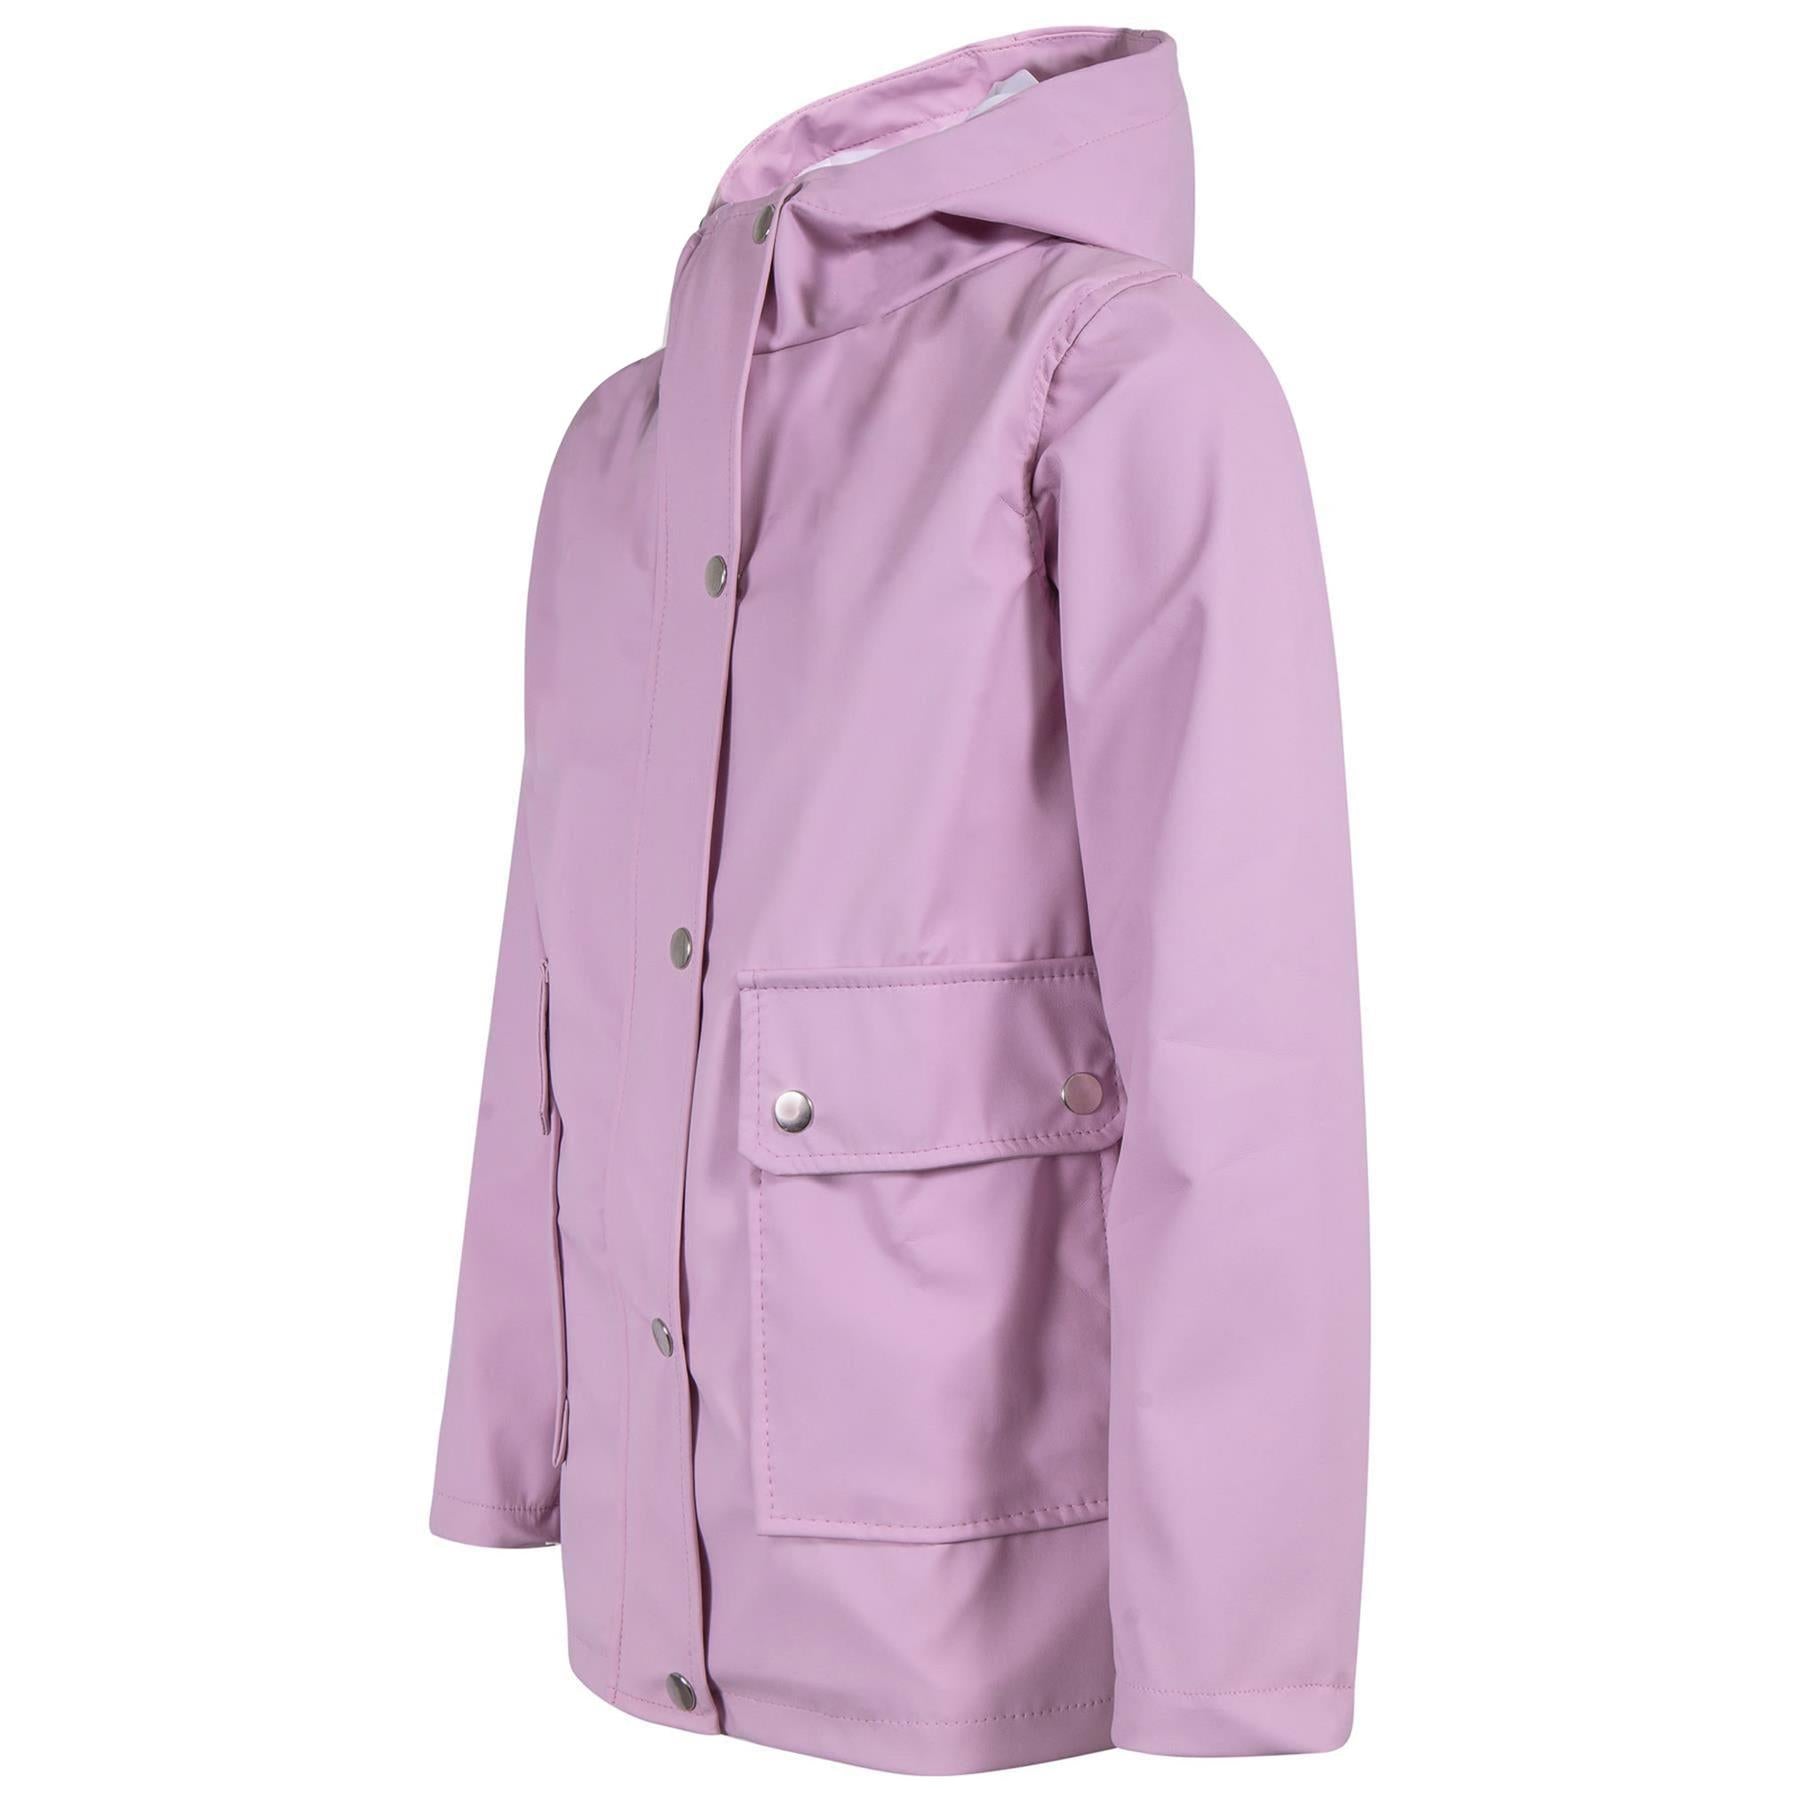 Girls Boys PU Raincoat Jacket Lilac Waterproof Coat